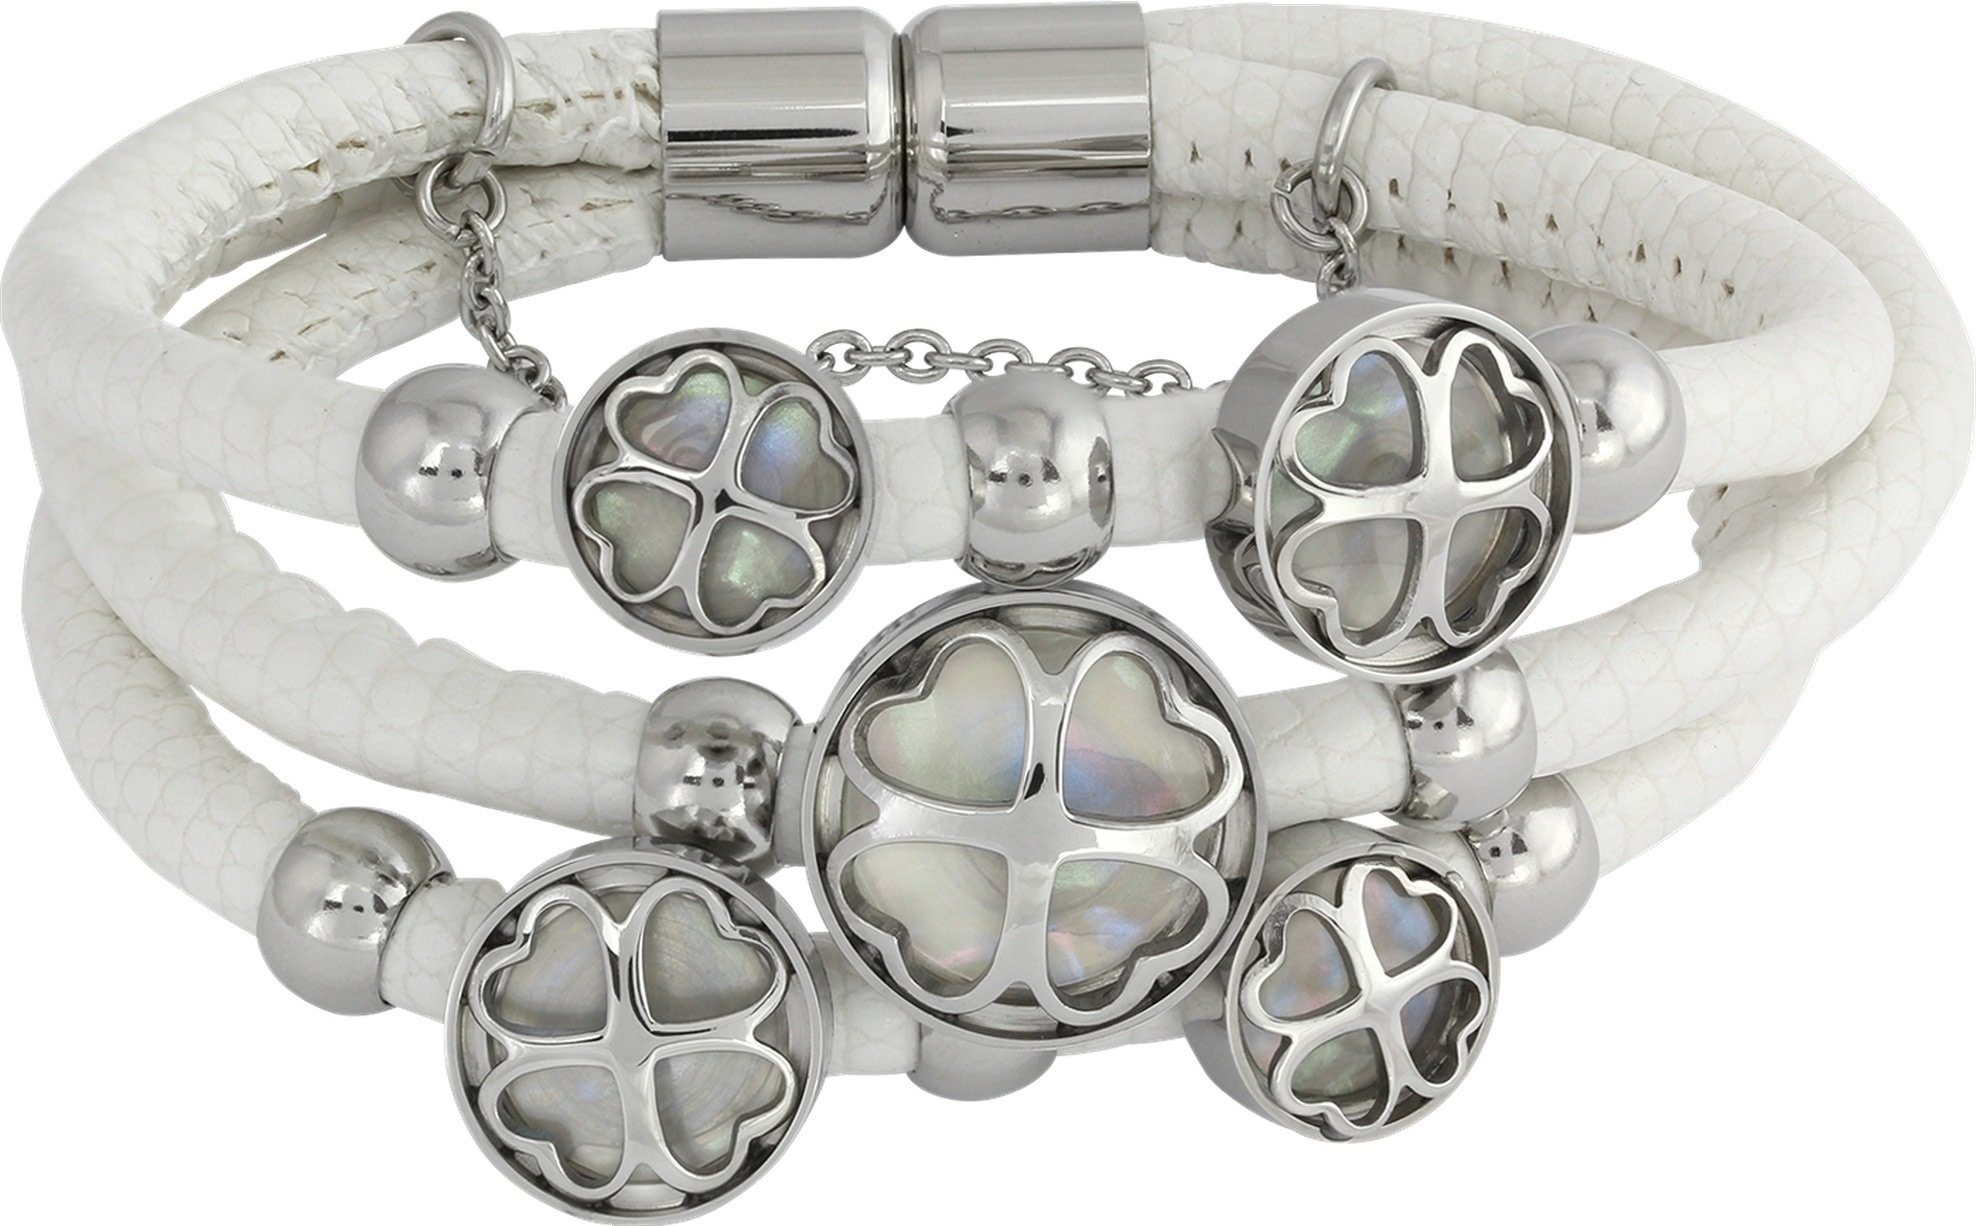 silber silb Steel), Damen Armband Armbänder Kleeblatt weiß (Armband), für (Stainless aus Amello Edelstahl Farbe: Amello weiß, Edelstahlarmband